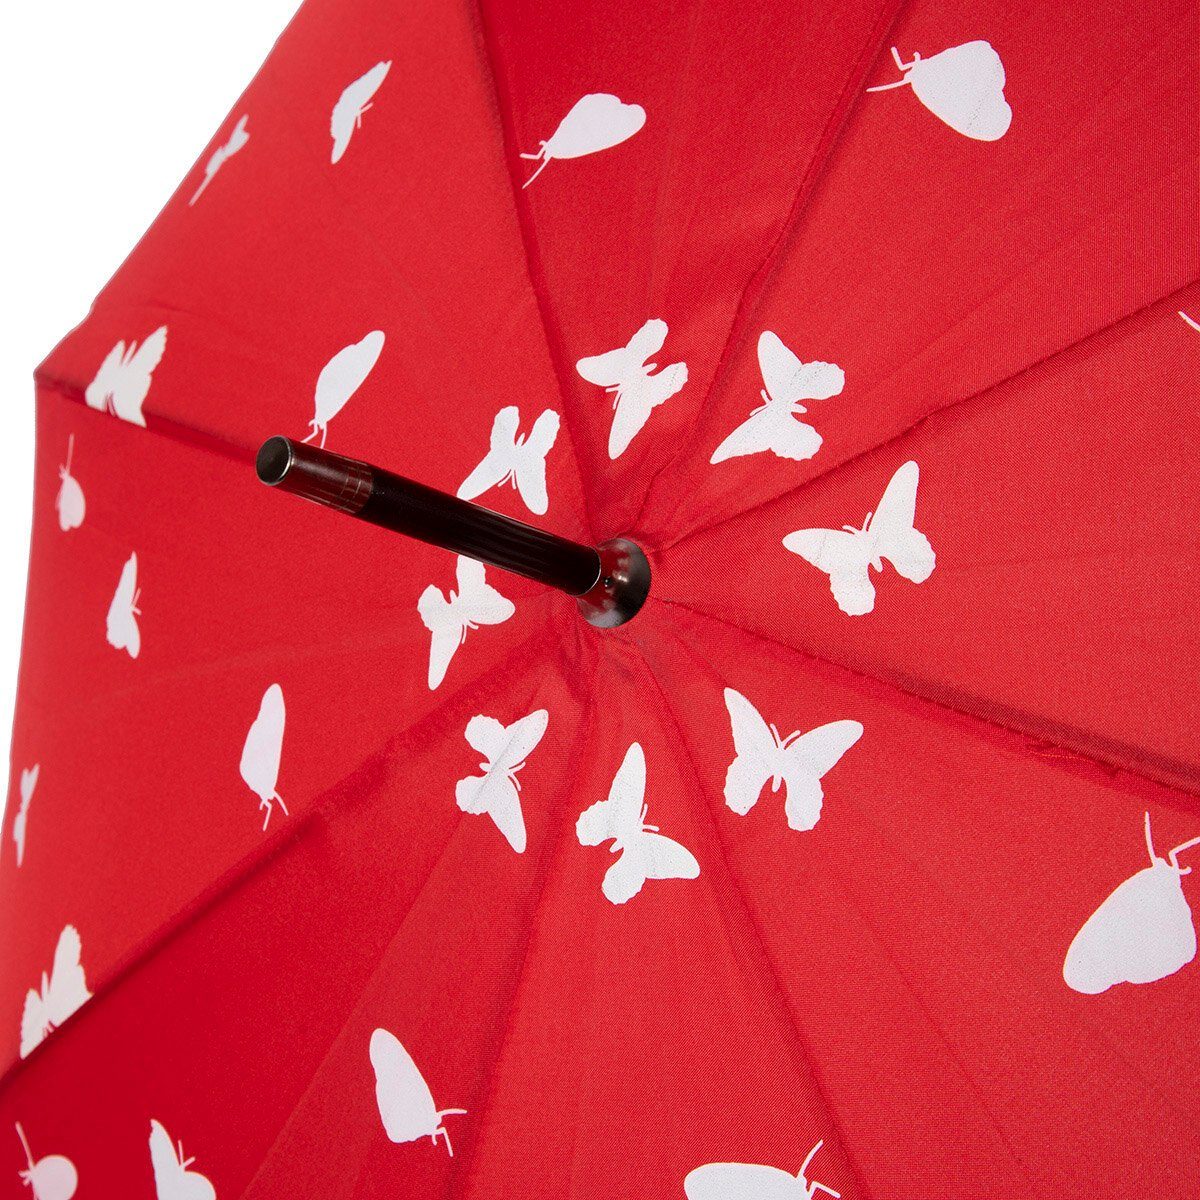 BIGGBRELLA Langregenschirm Biggbrella Rot Regenschirm 104cm So003